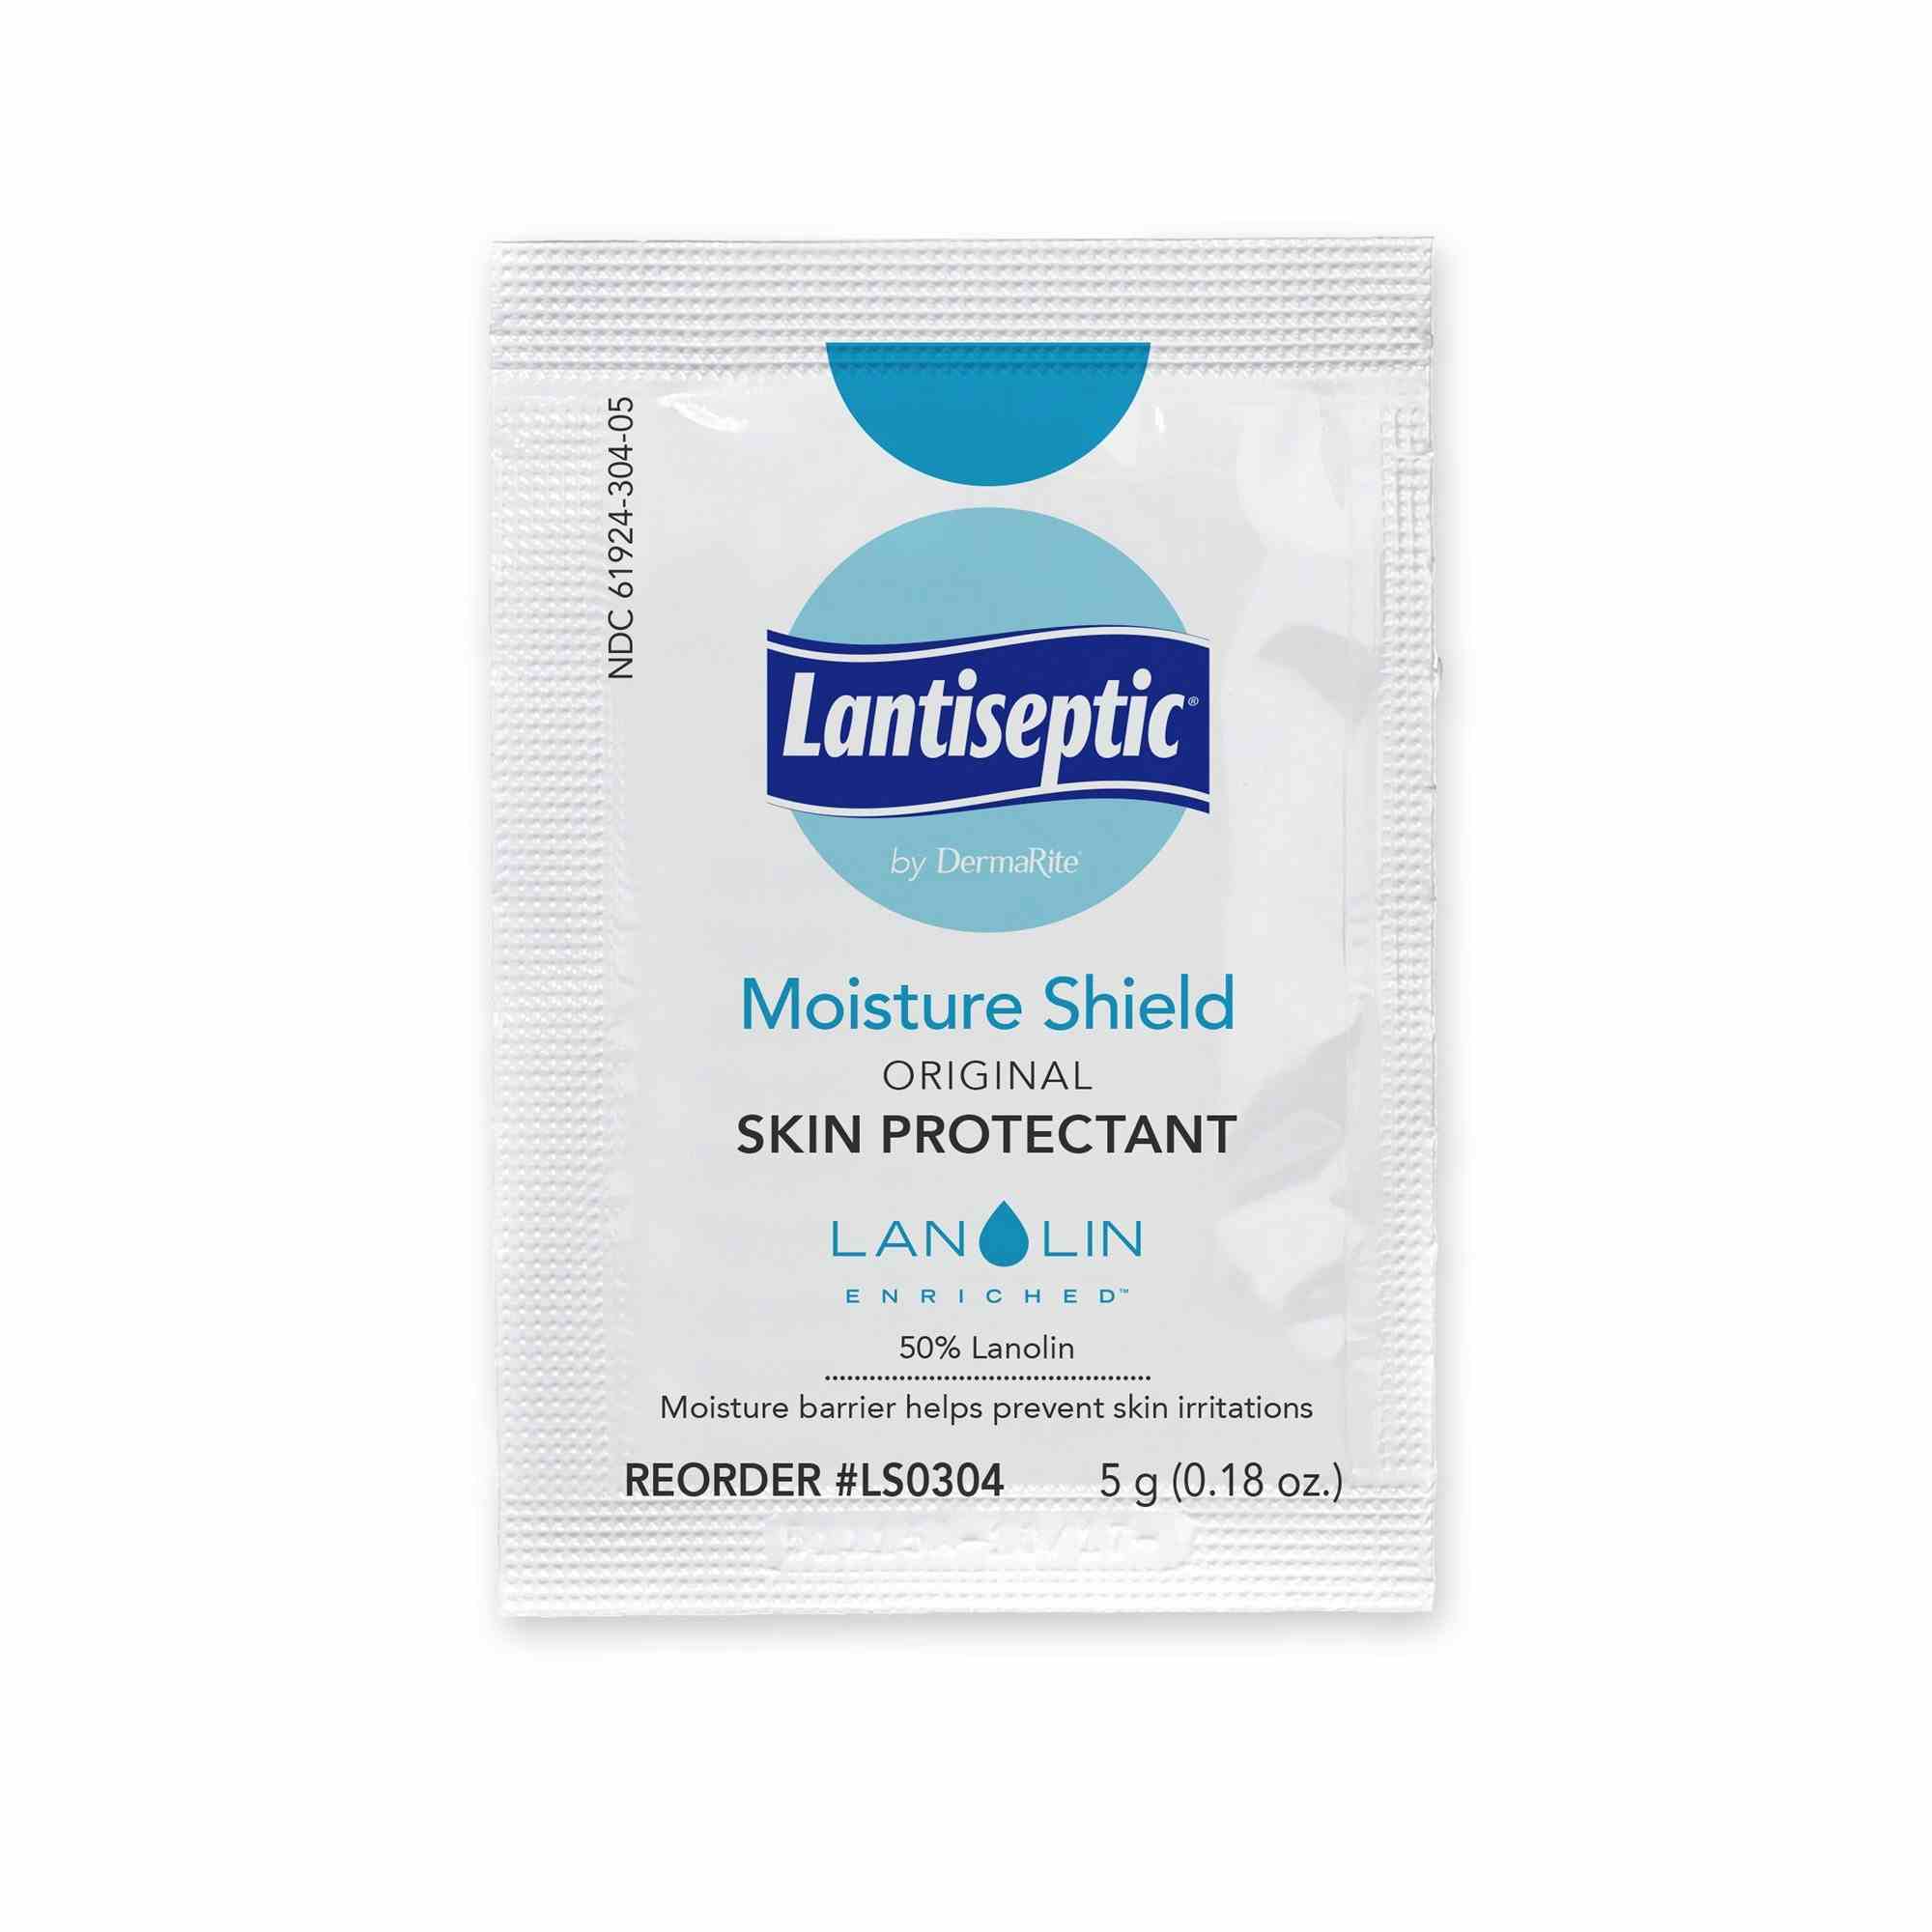 Lantiseptic Moisture Shield Original Skin Protectant , LS0304, 5 g - Pack of 144